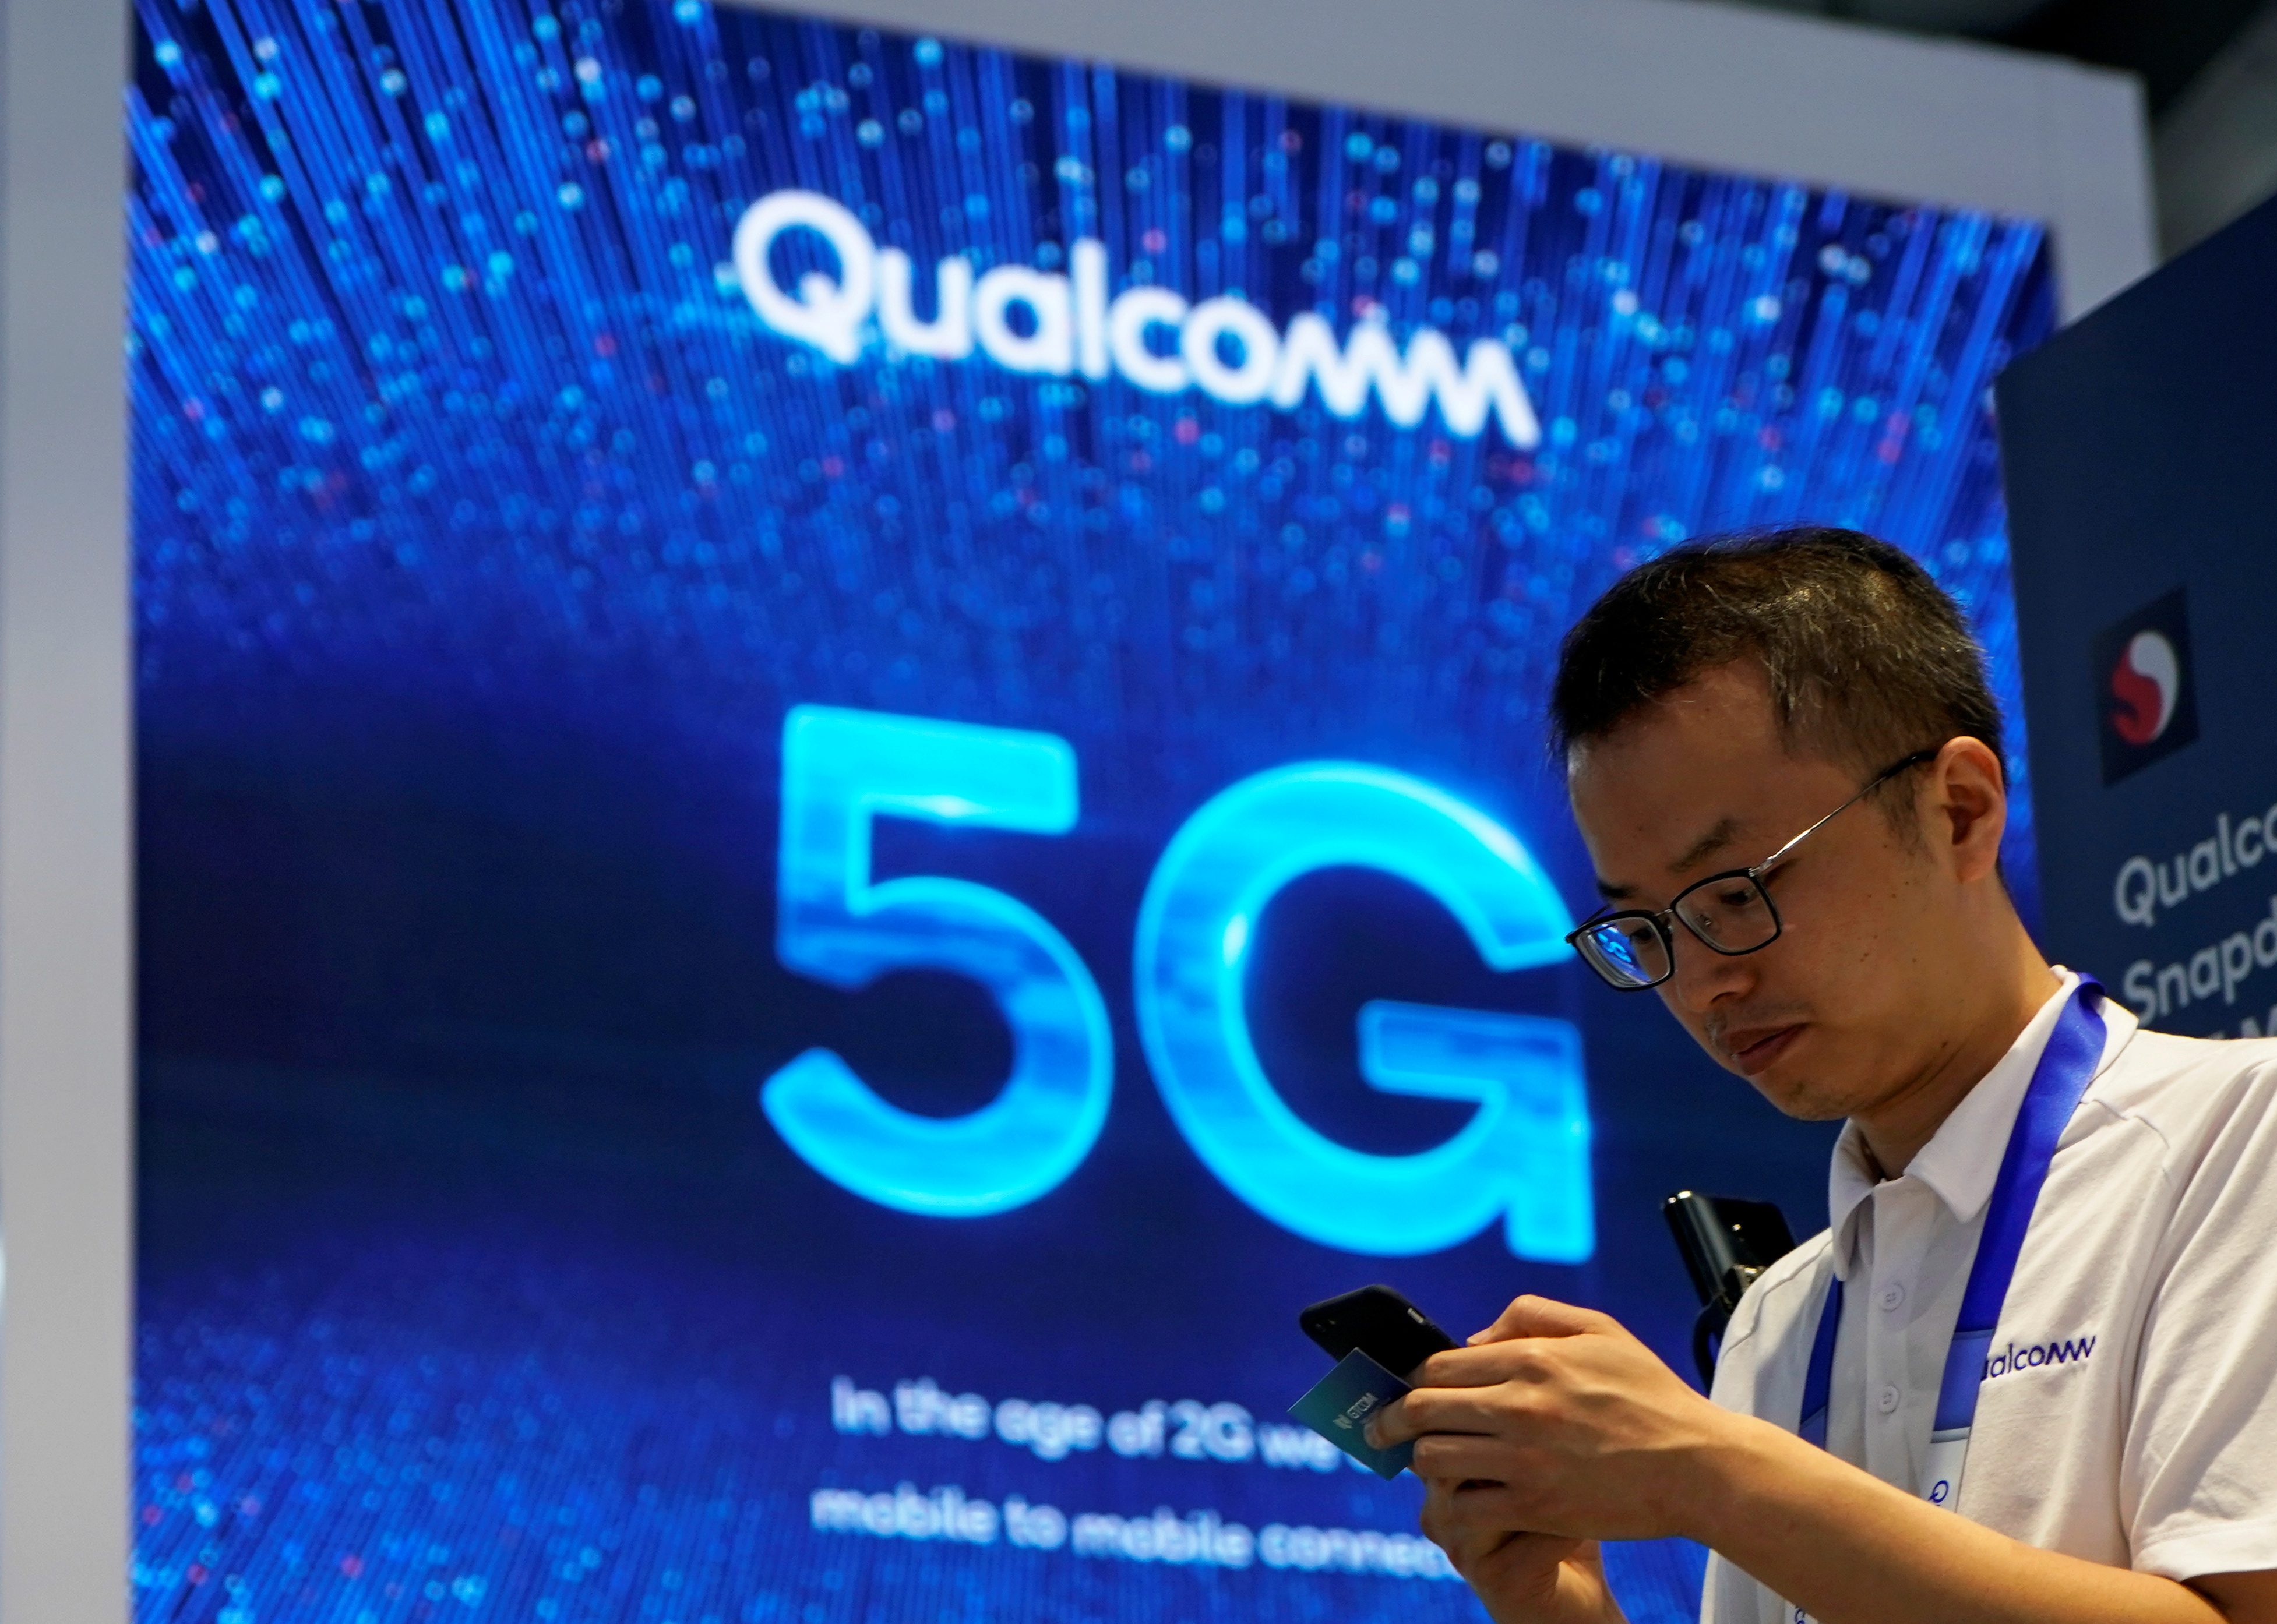 Qualcomm optimistic on 5G, connected device sales as supply bottlenecks ease